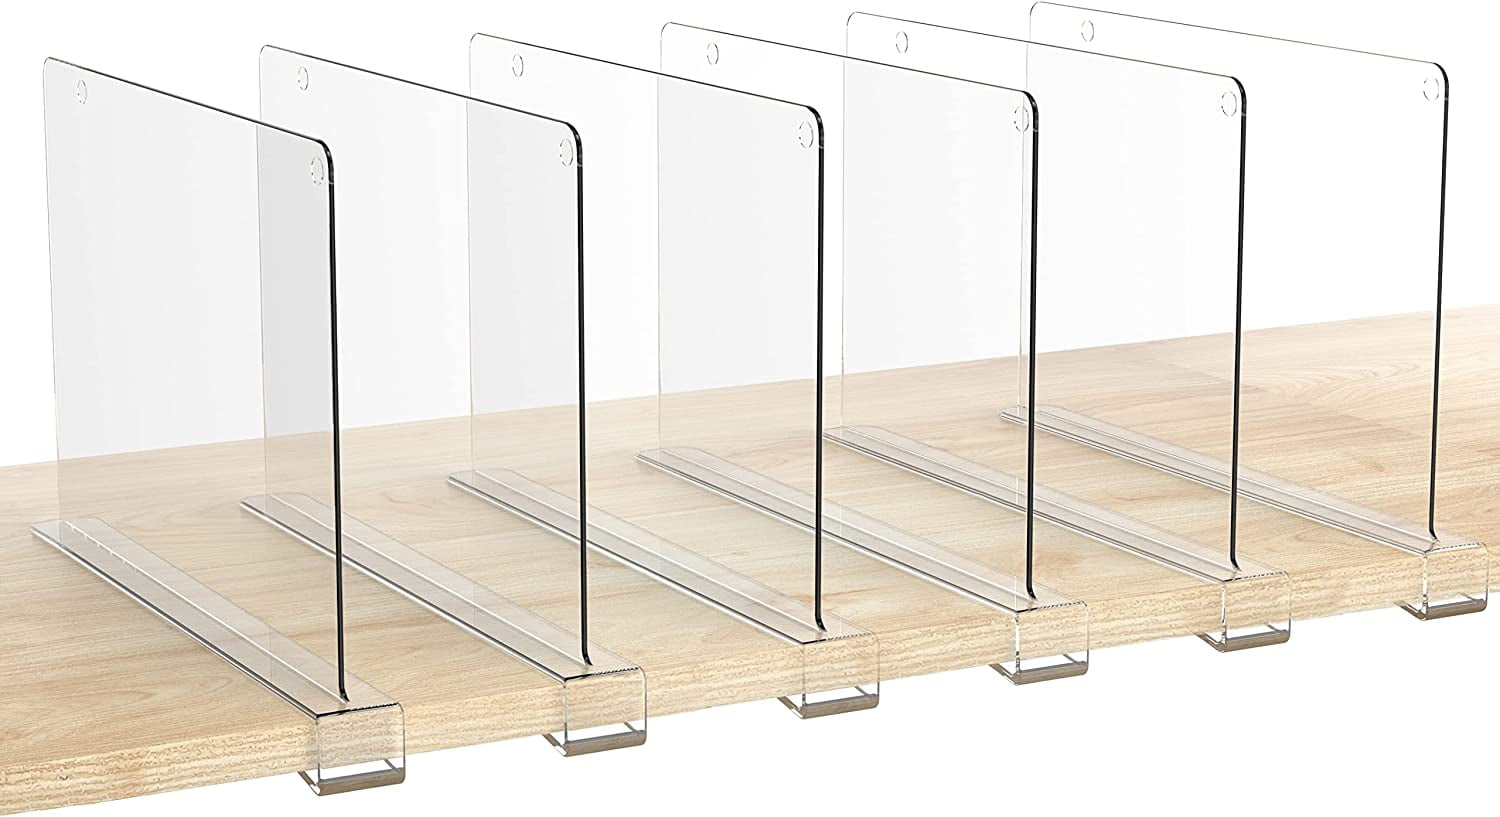 6 Pack Shelf Dividers for Closet Organization,Clear Acrylic Shelf